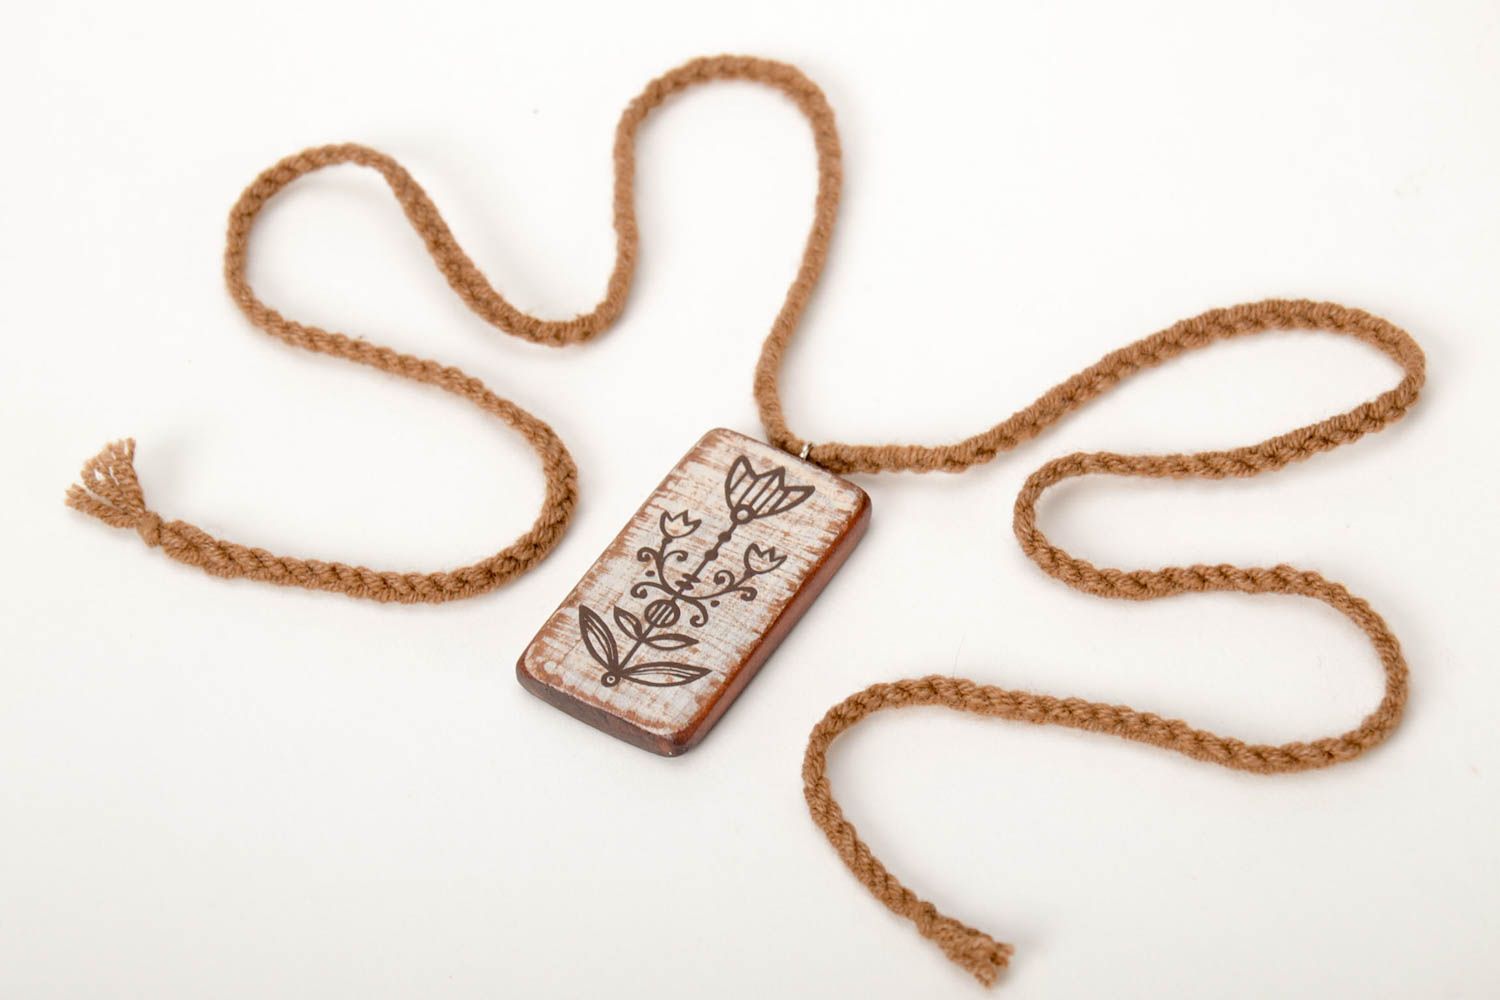 Handmade pendant designer jewelry wooden accessory wooden pendant gift ideas photo 4